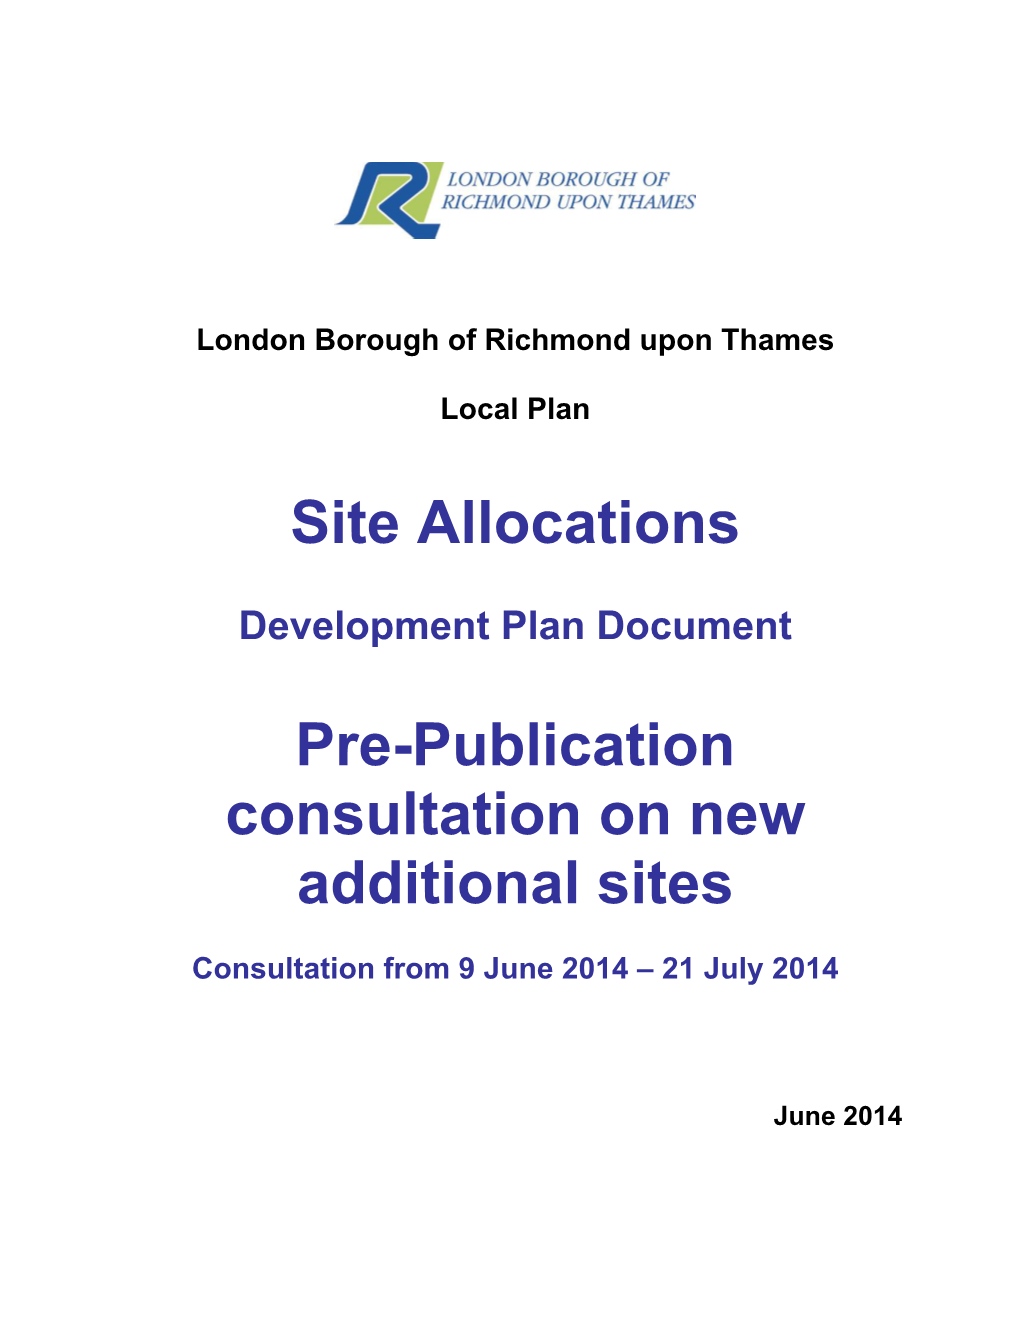 Pre-Publication Site Allocations Plan – New Additional Sites Consultation June 2014